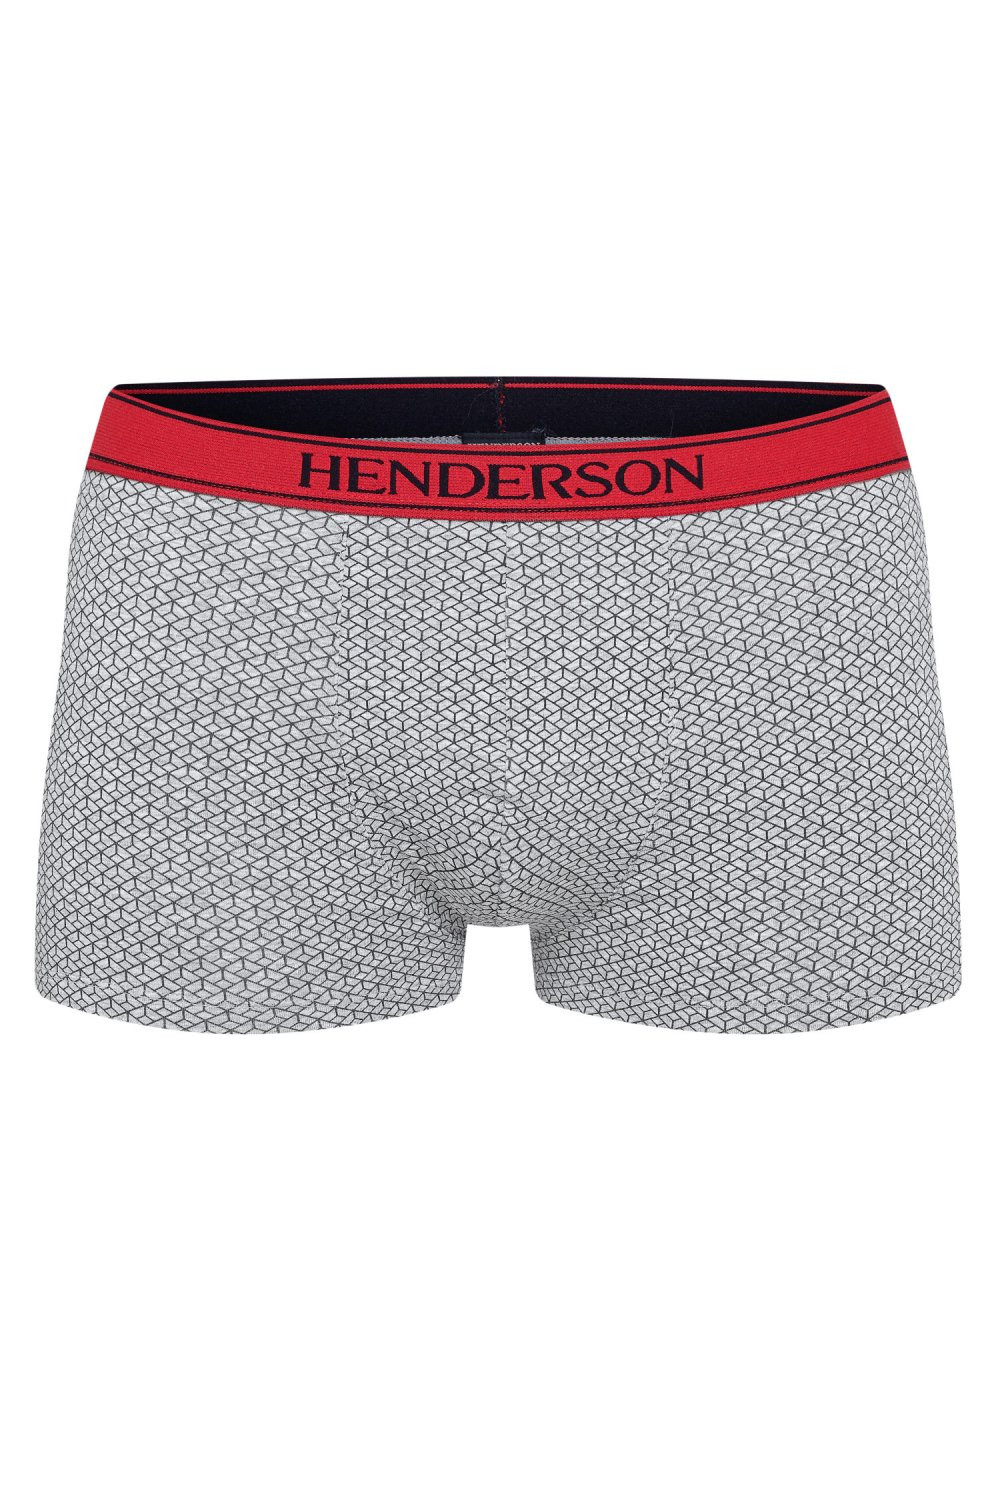 Pánské boxerky model 8447501 - Henderson Barva: šedá, Velikost: XXL